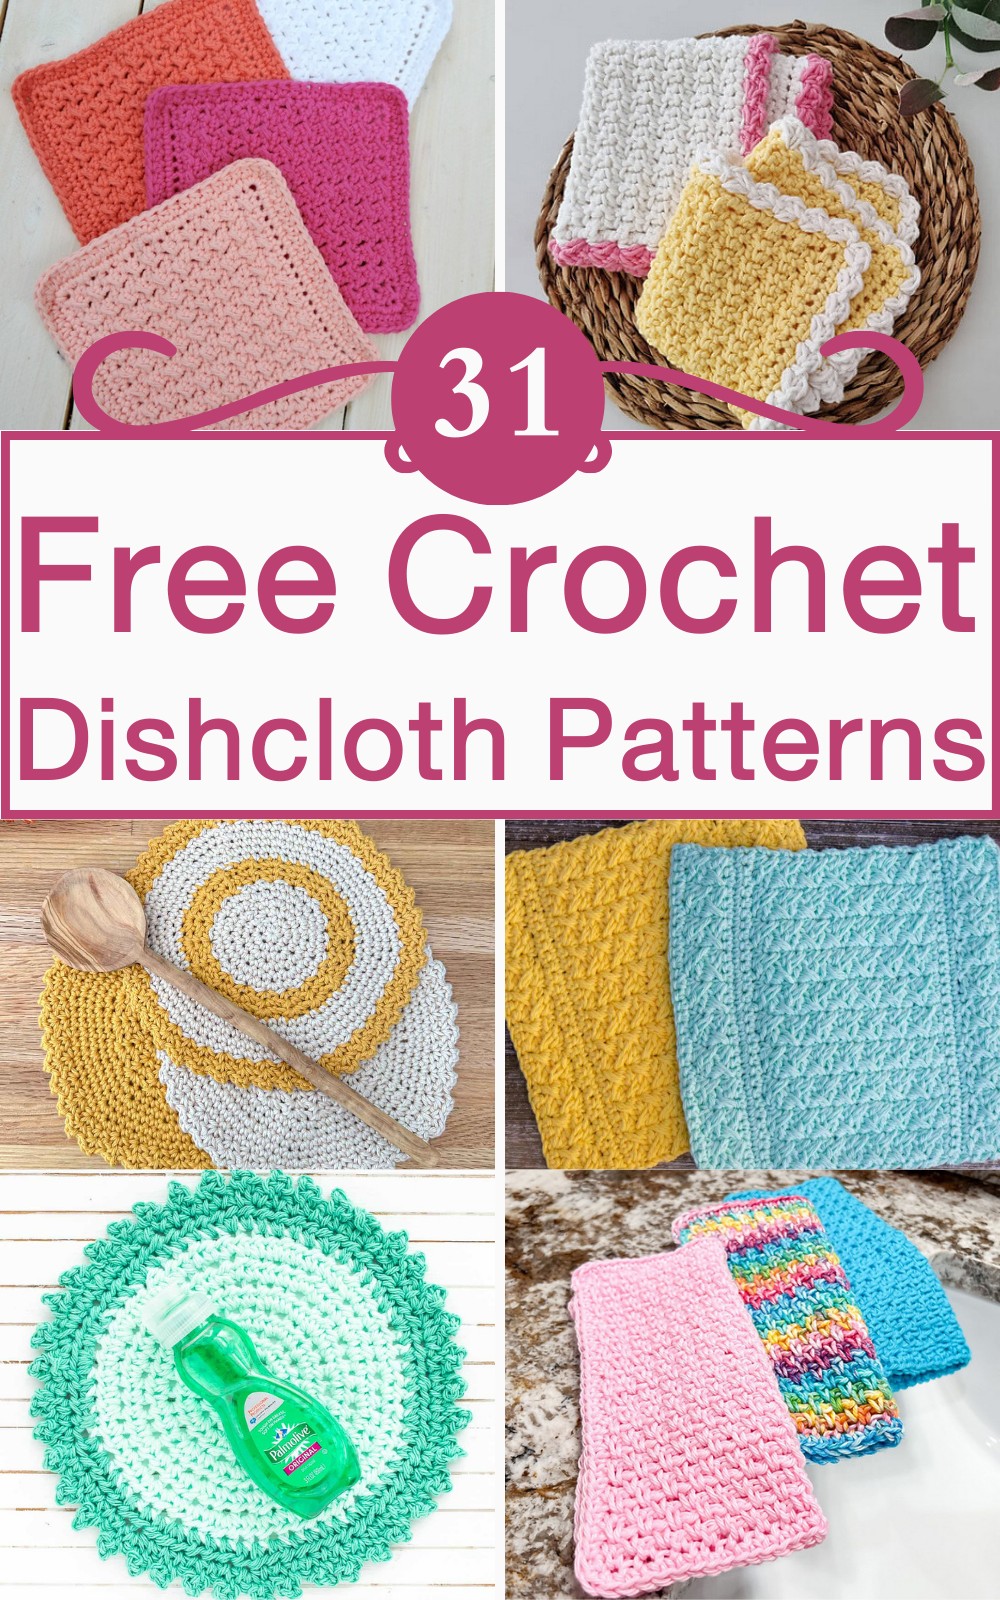 31 Free Crochet Dishcloth Patterns